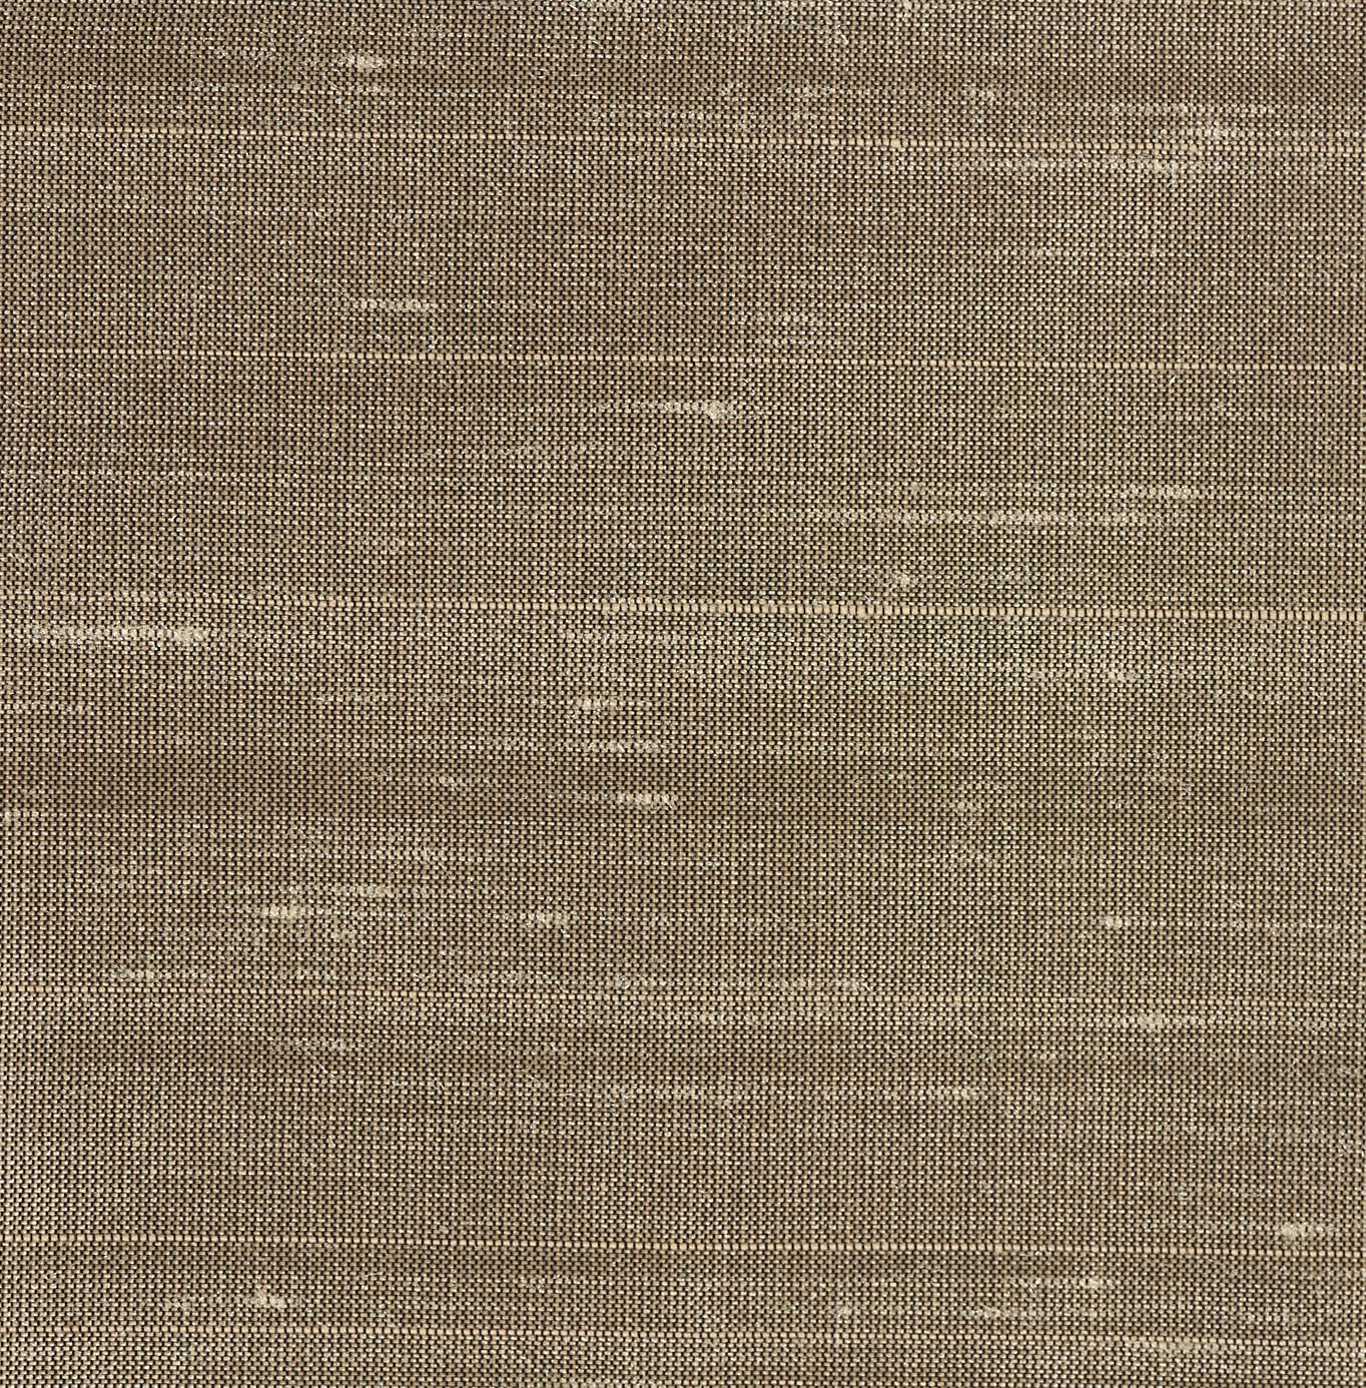 Deflect Fabric by Harlequin - HPOL440691 - Tawny